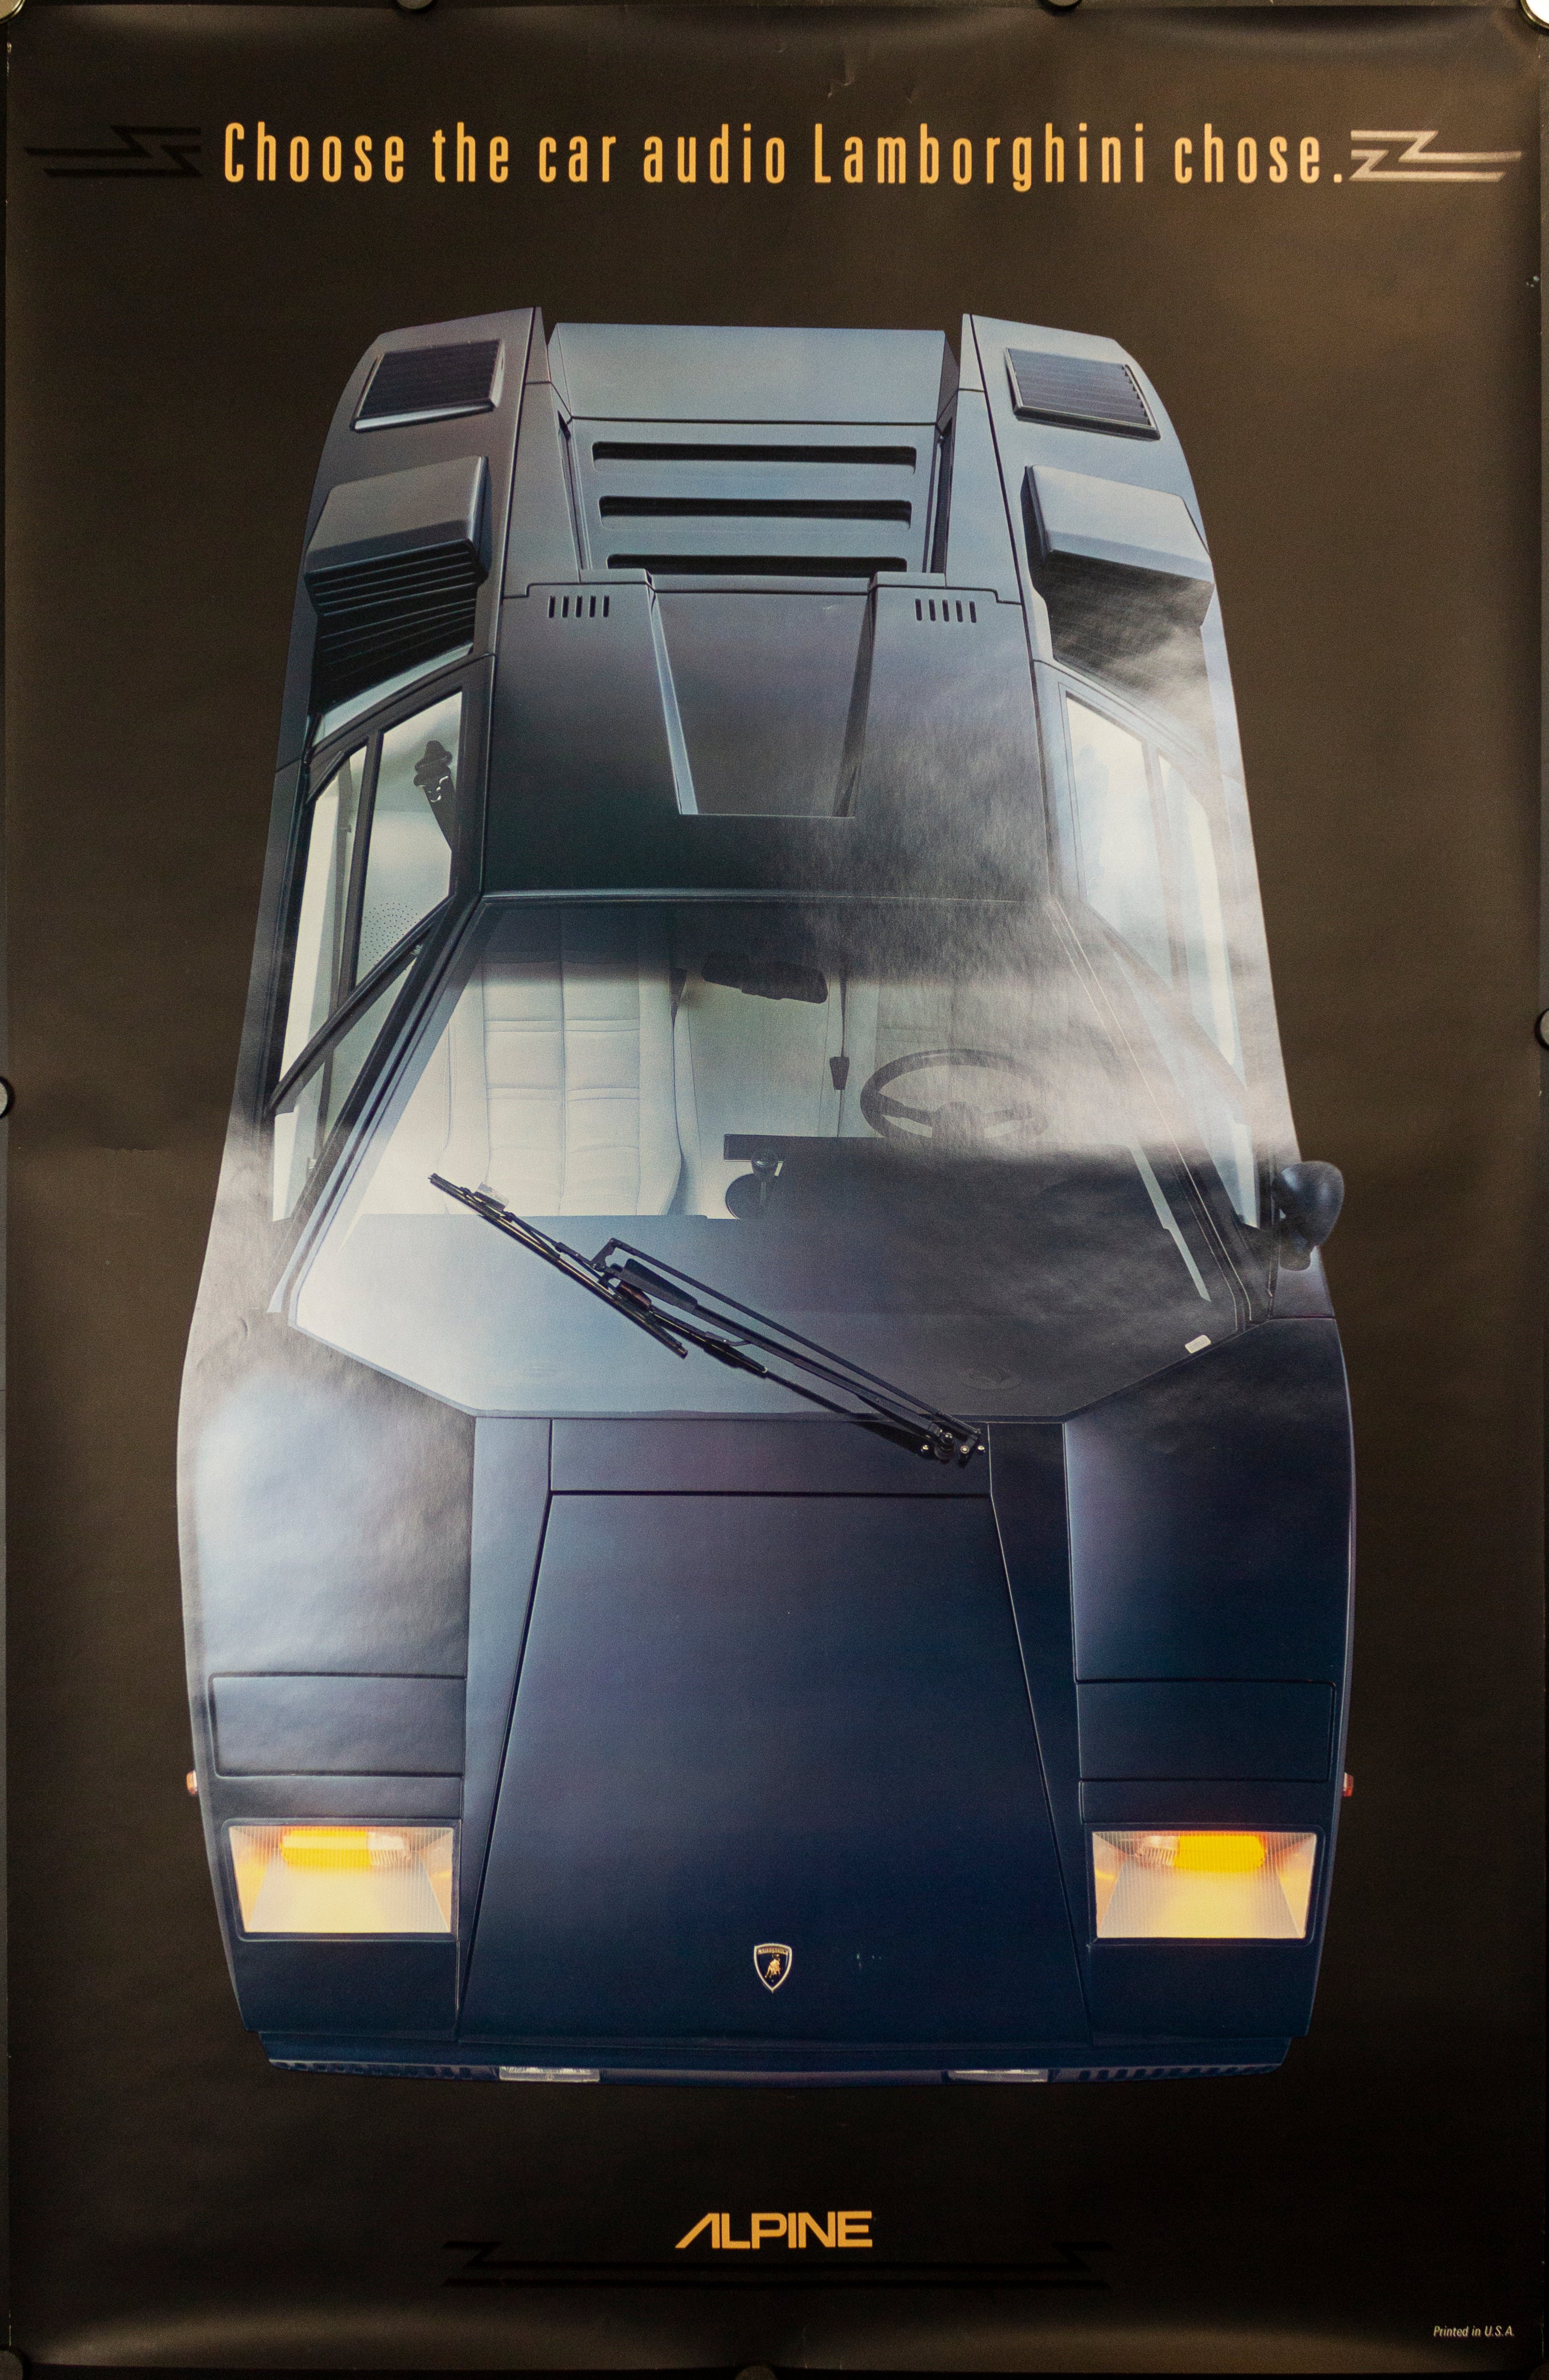 1980 Choose The Car Audio Lamborghini Chose Alpine Stereo Poster – Golden  Age Posters